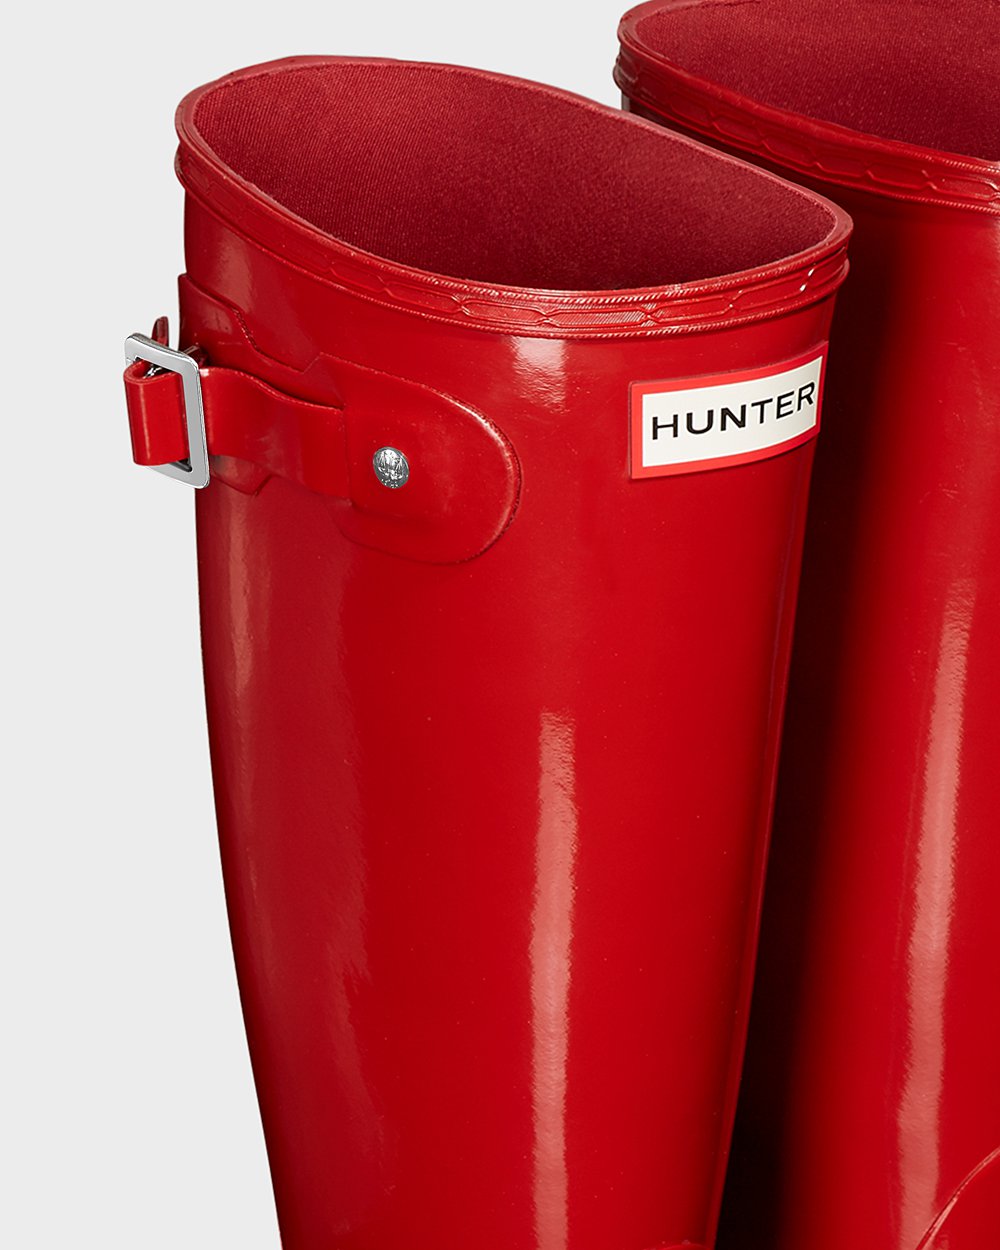 Womens Tall Rain Boots - Hunter Original Gloss (43KWQRYHC) - Red